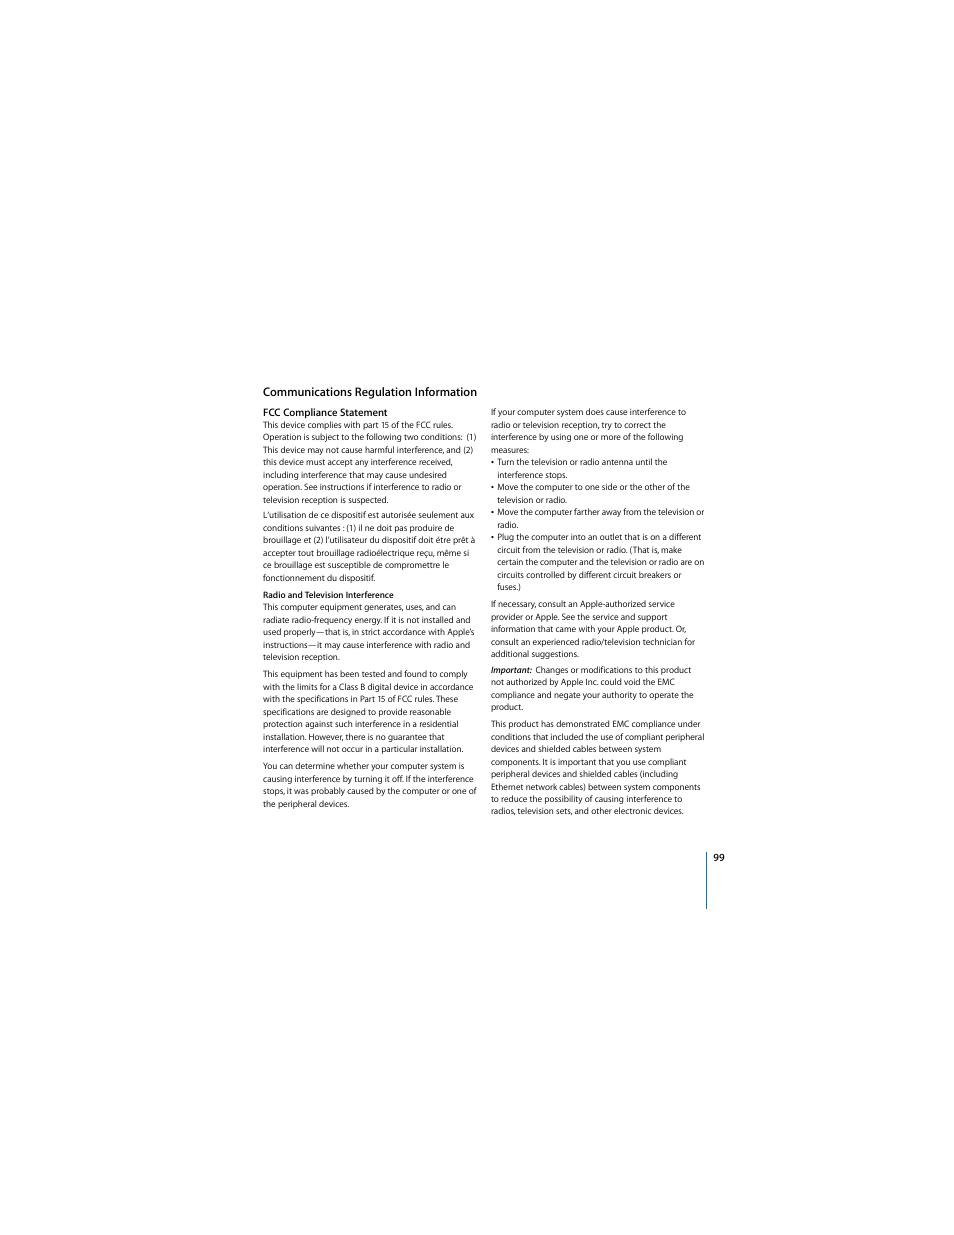 Communications regulation information | Apple iMac (mediados de 2006) Manual del usuario | Página 99 / 102